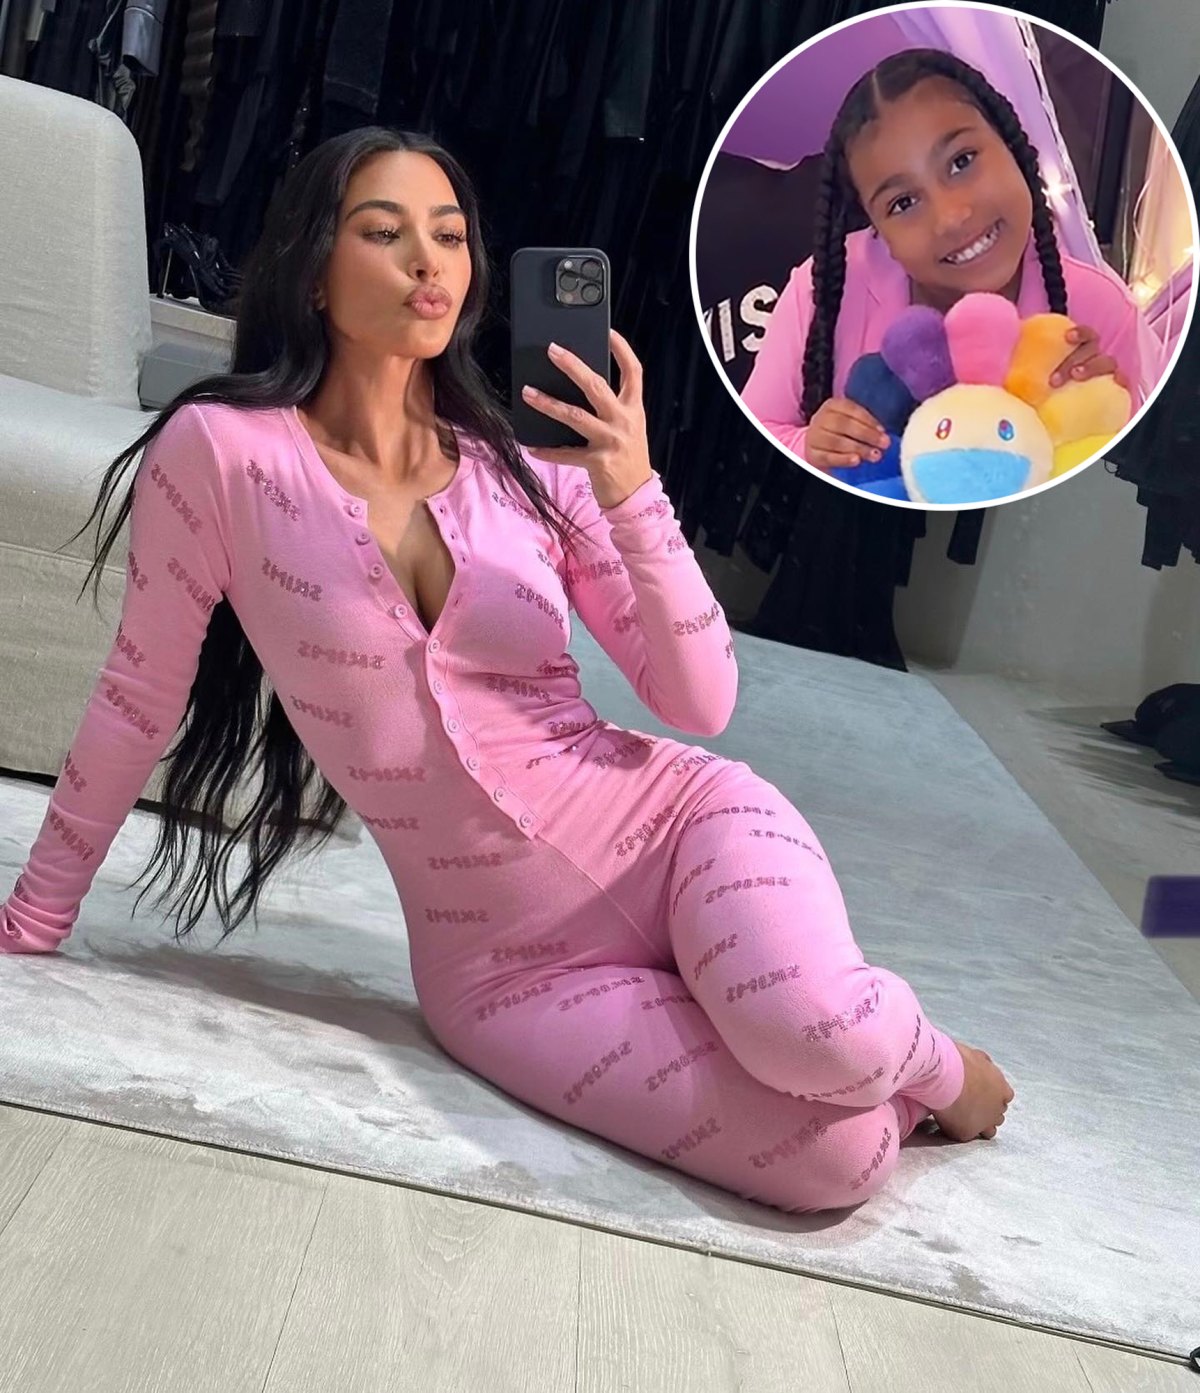 Kim Kardashian's daughter North gets an early birthday present